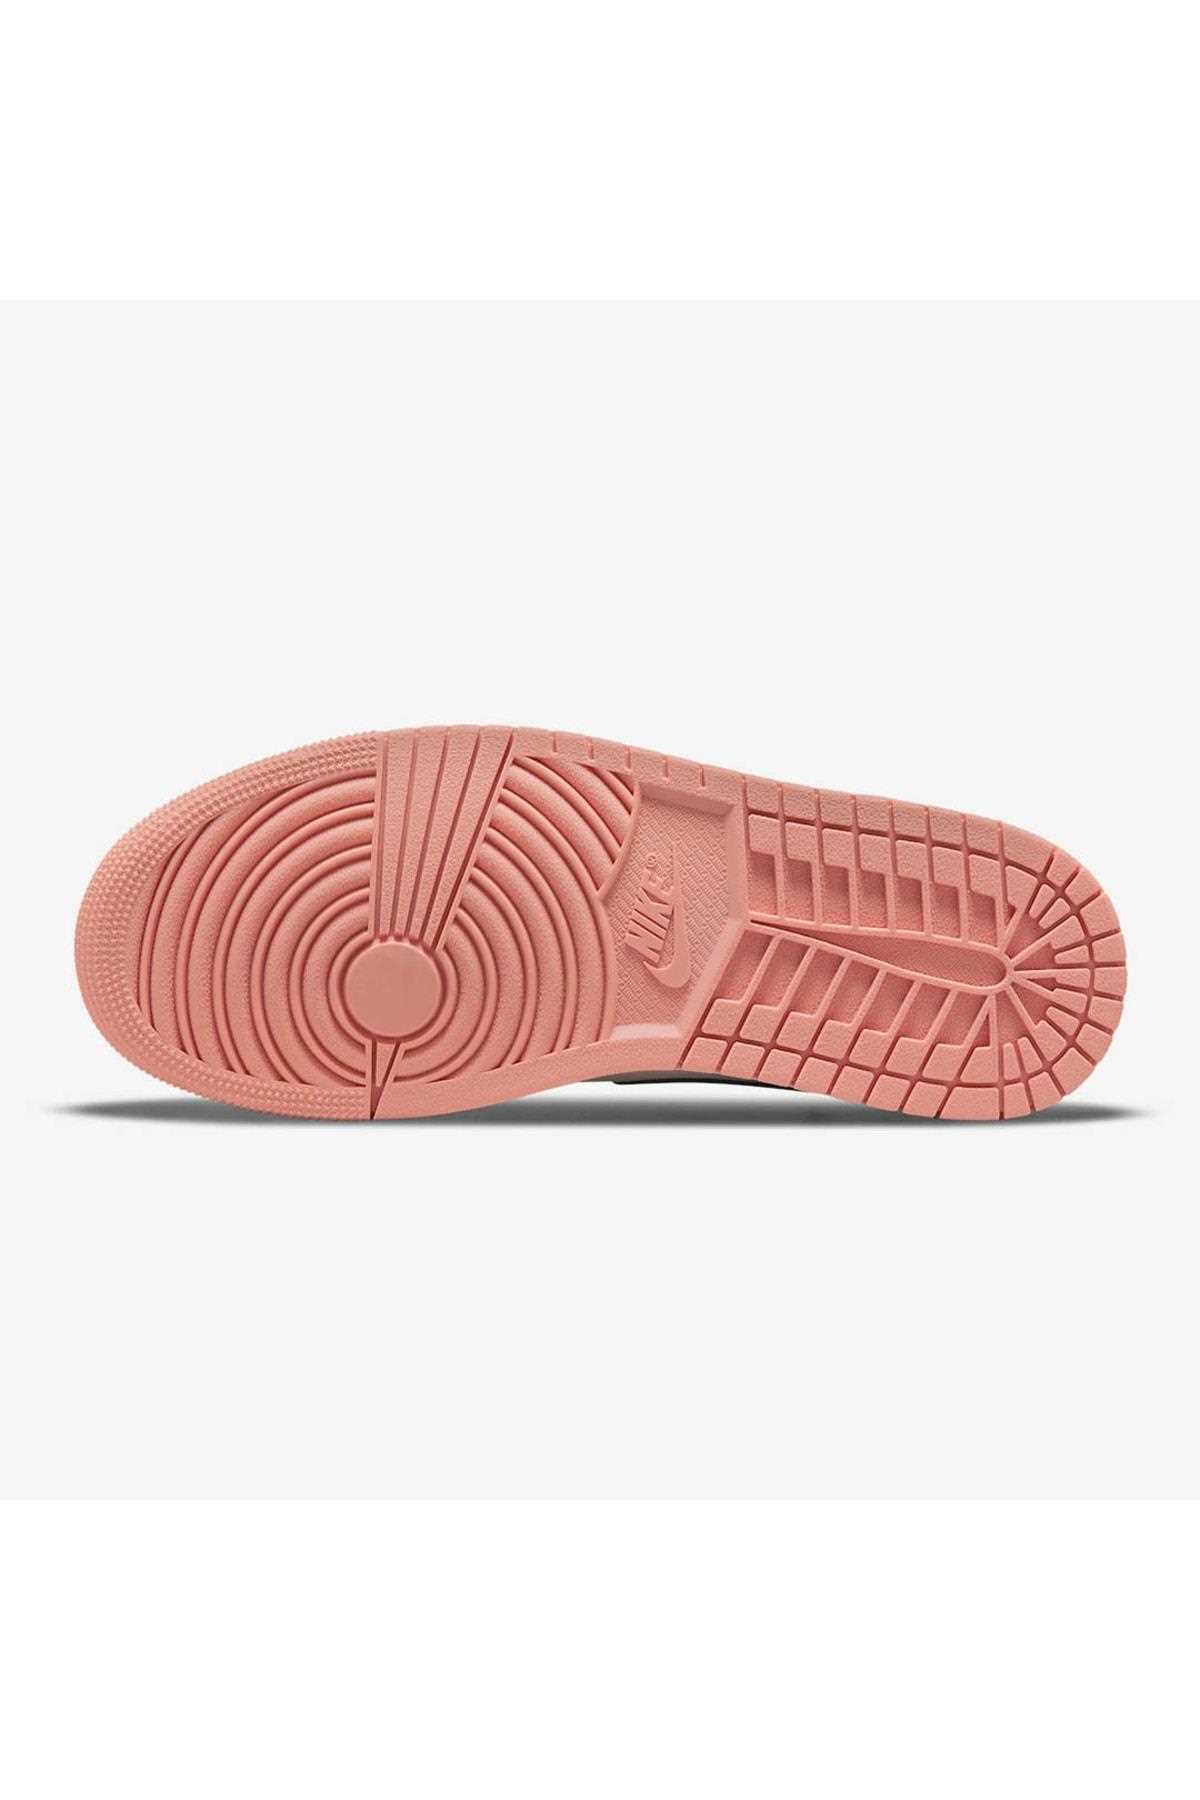 کفش چرم اصل اسپرت زنانه ارزان شیک Nike اورجینال کد ty298951997